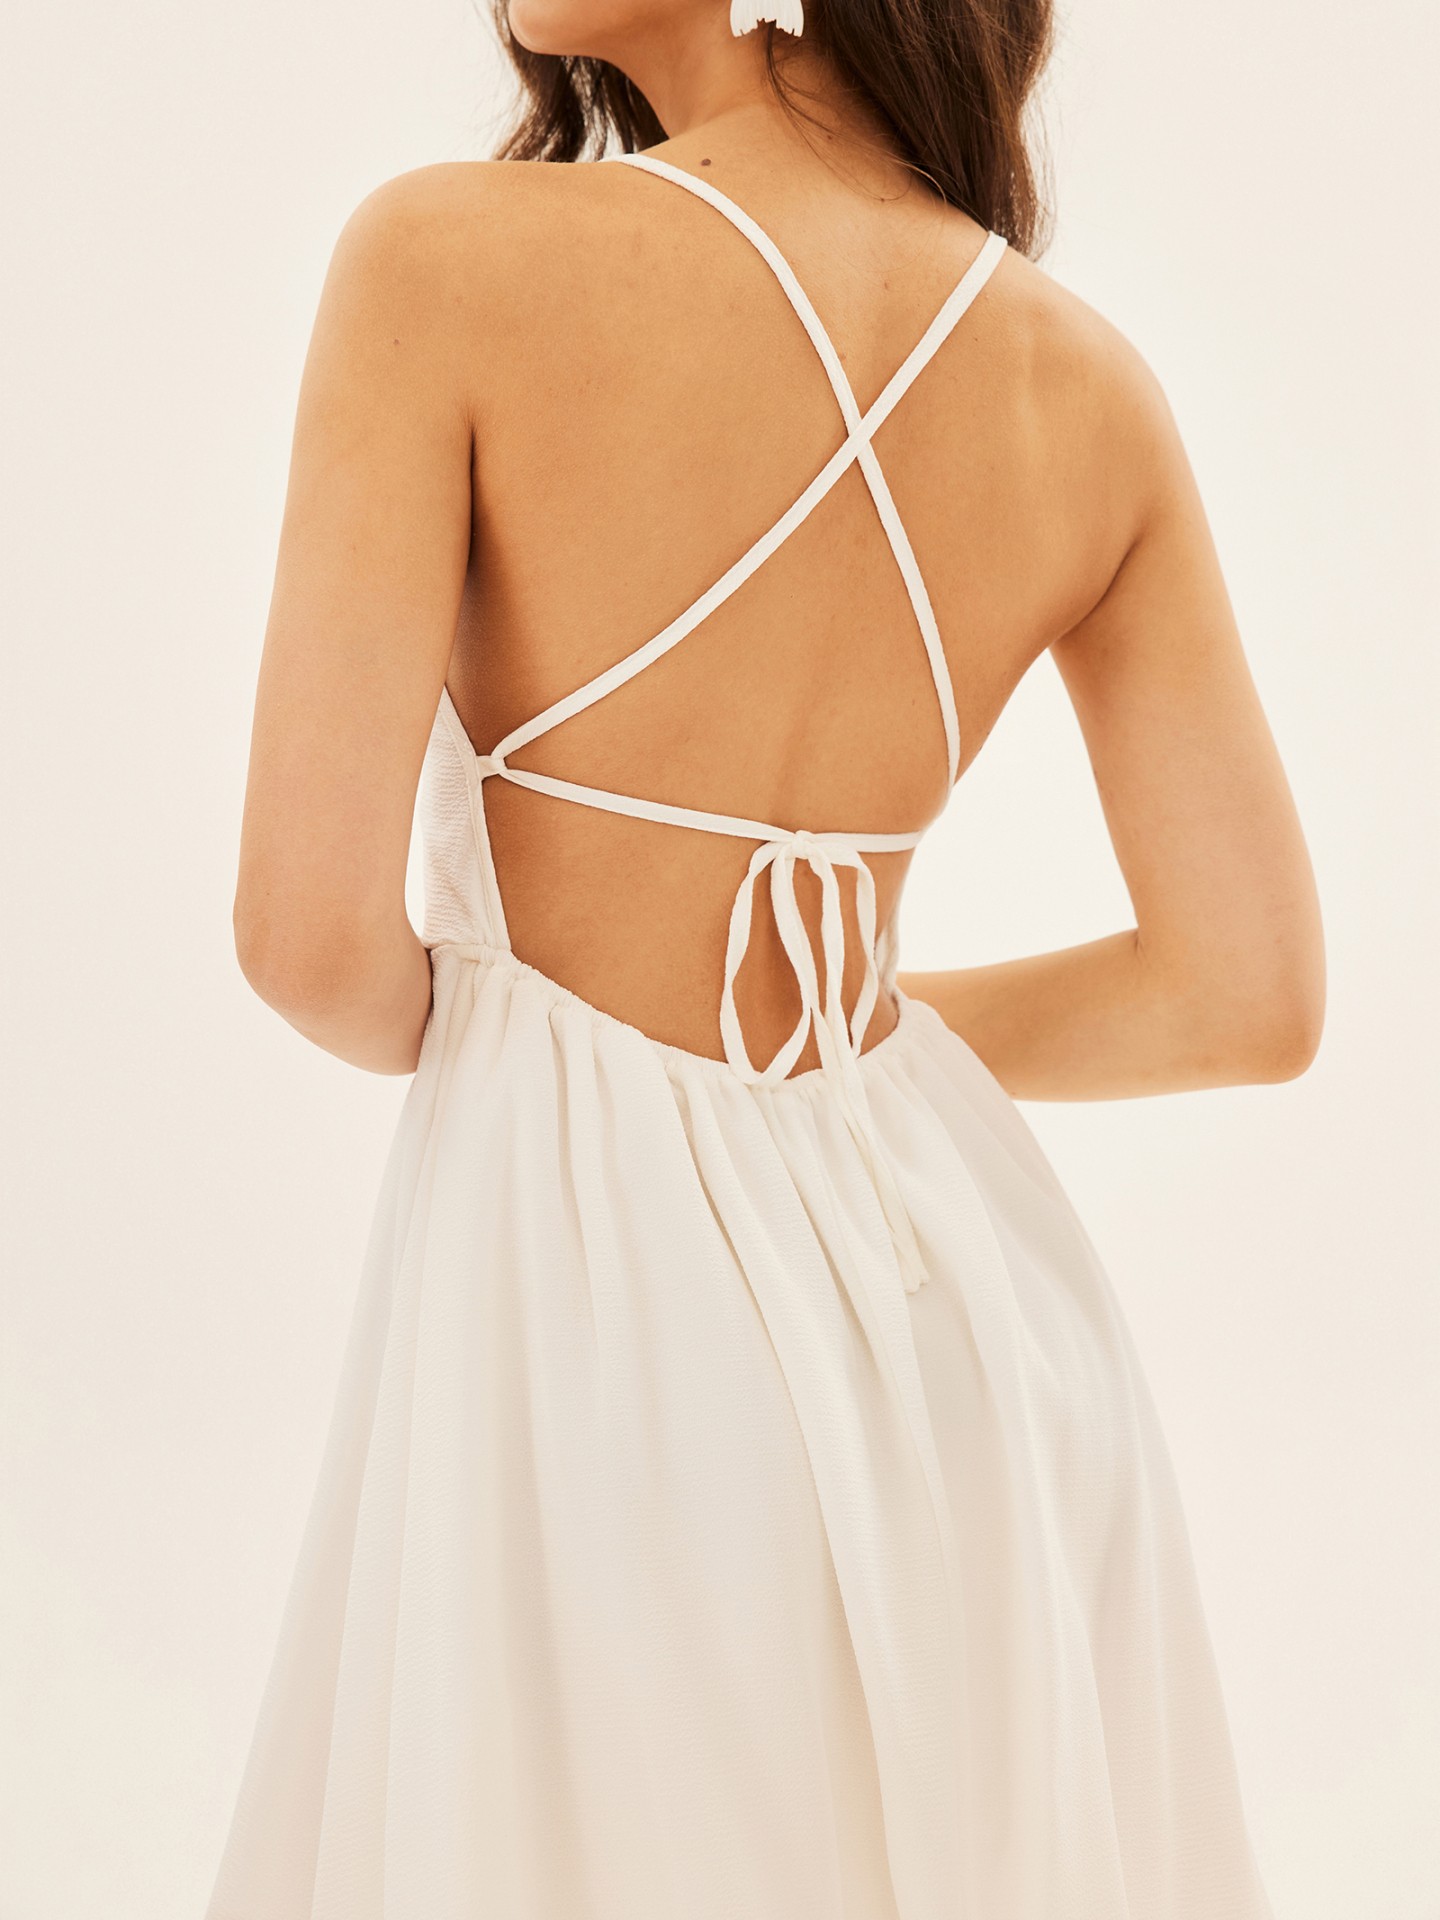 Backless A-Line Dress丨Urbanic